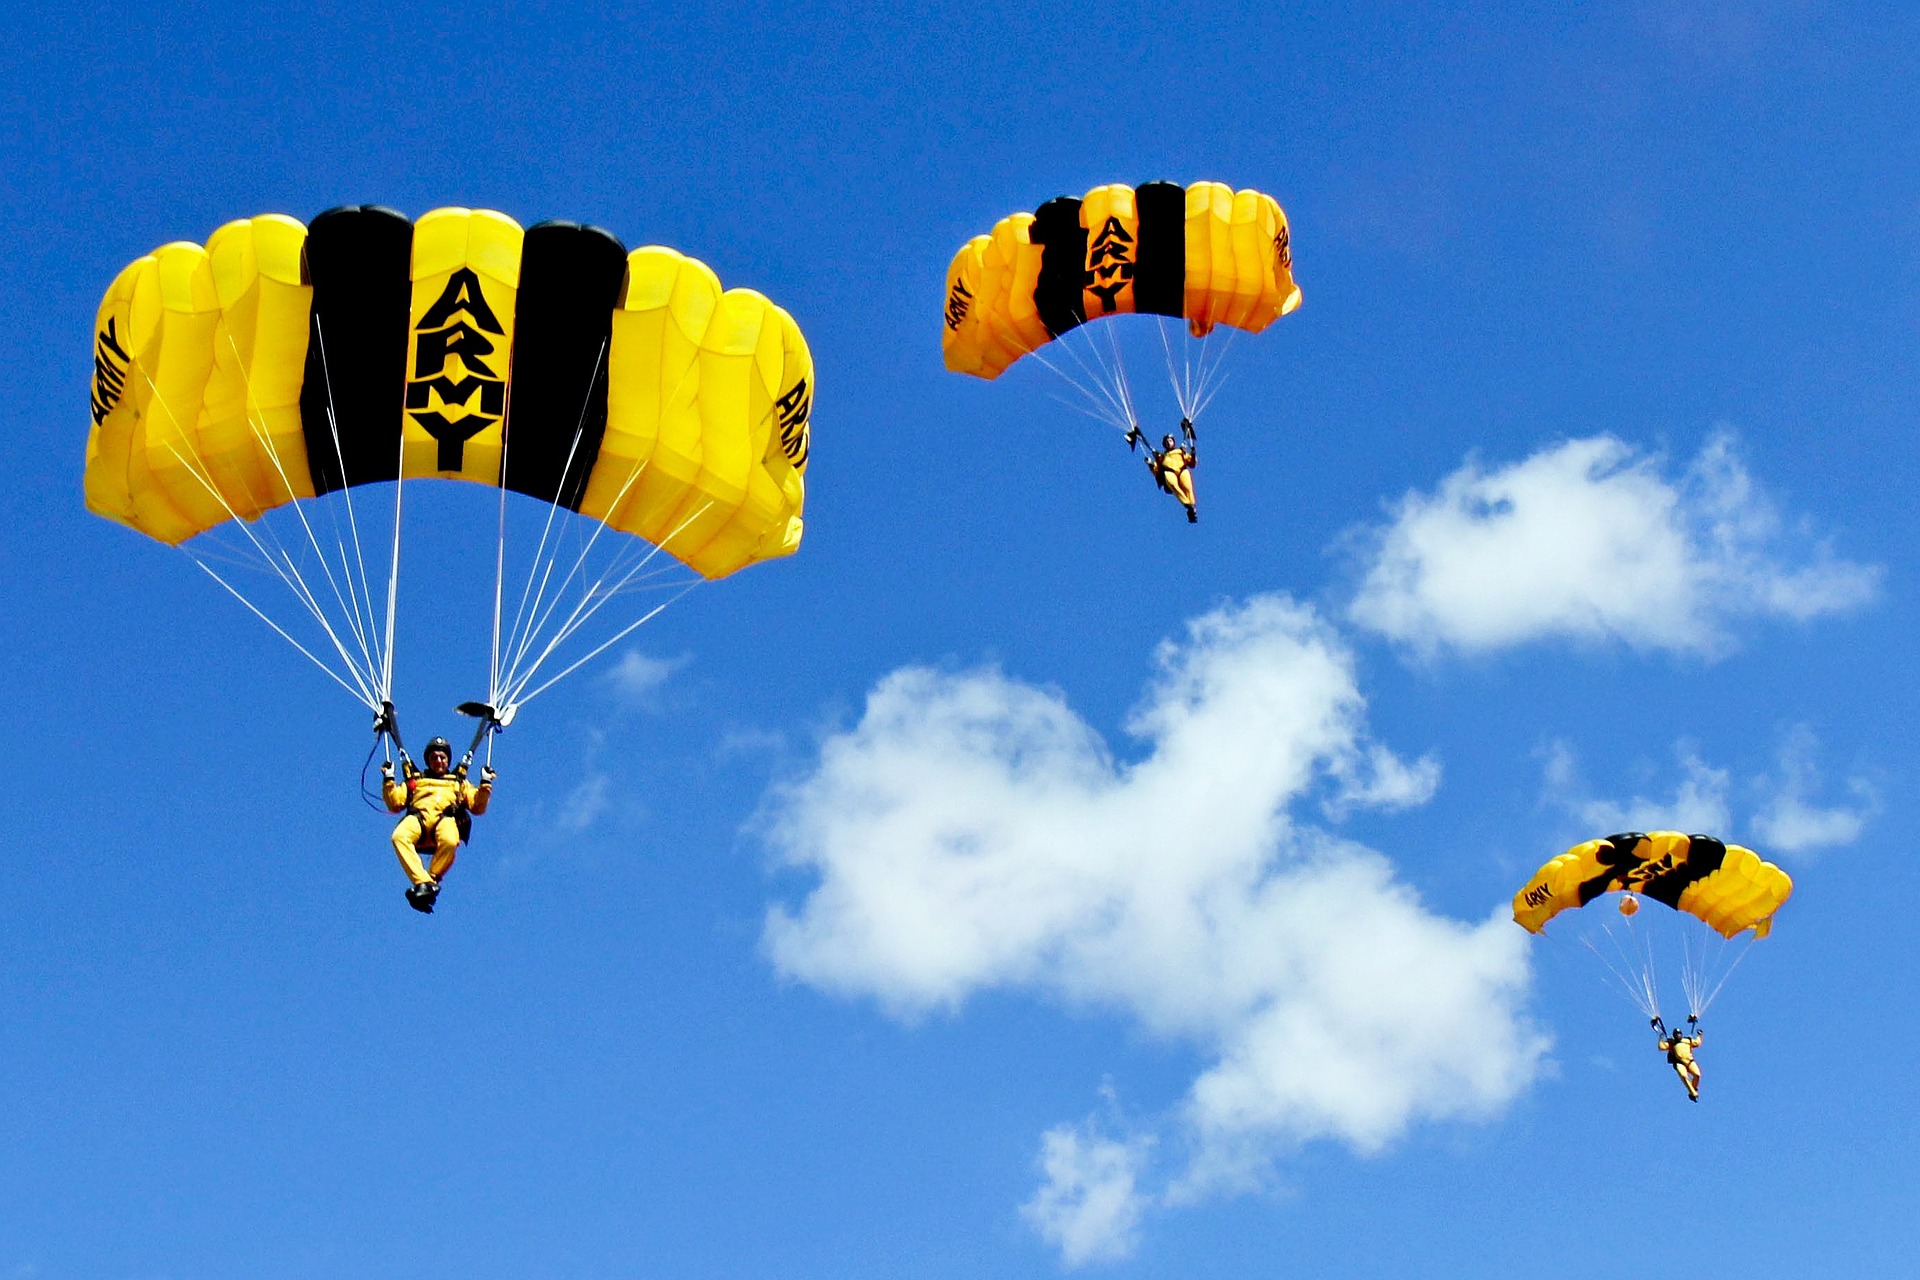 Army soldiers skydiving